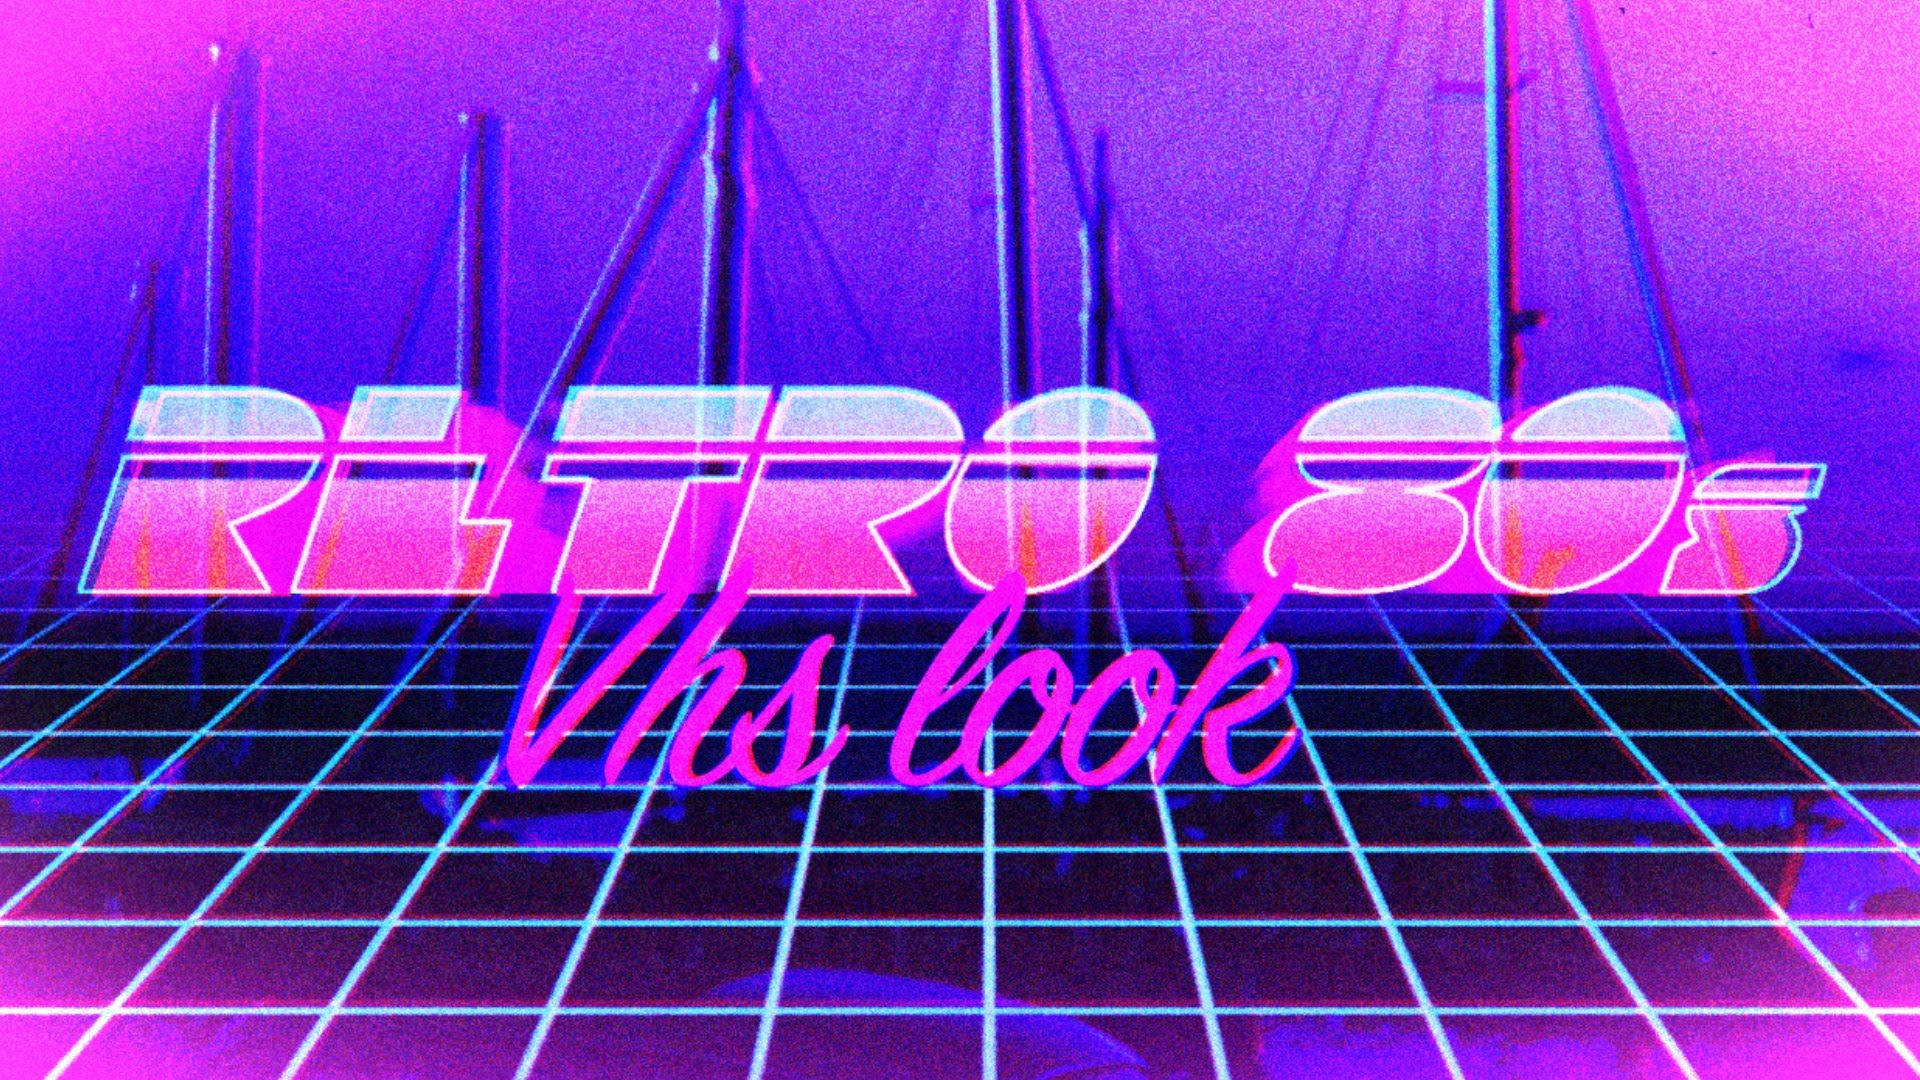 Aesthetic Retro 80's Vhs Look Background